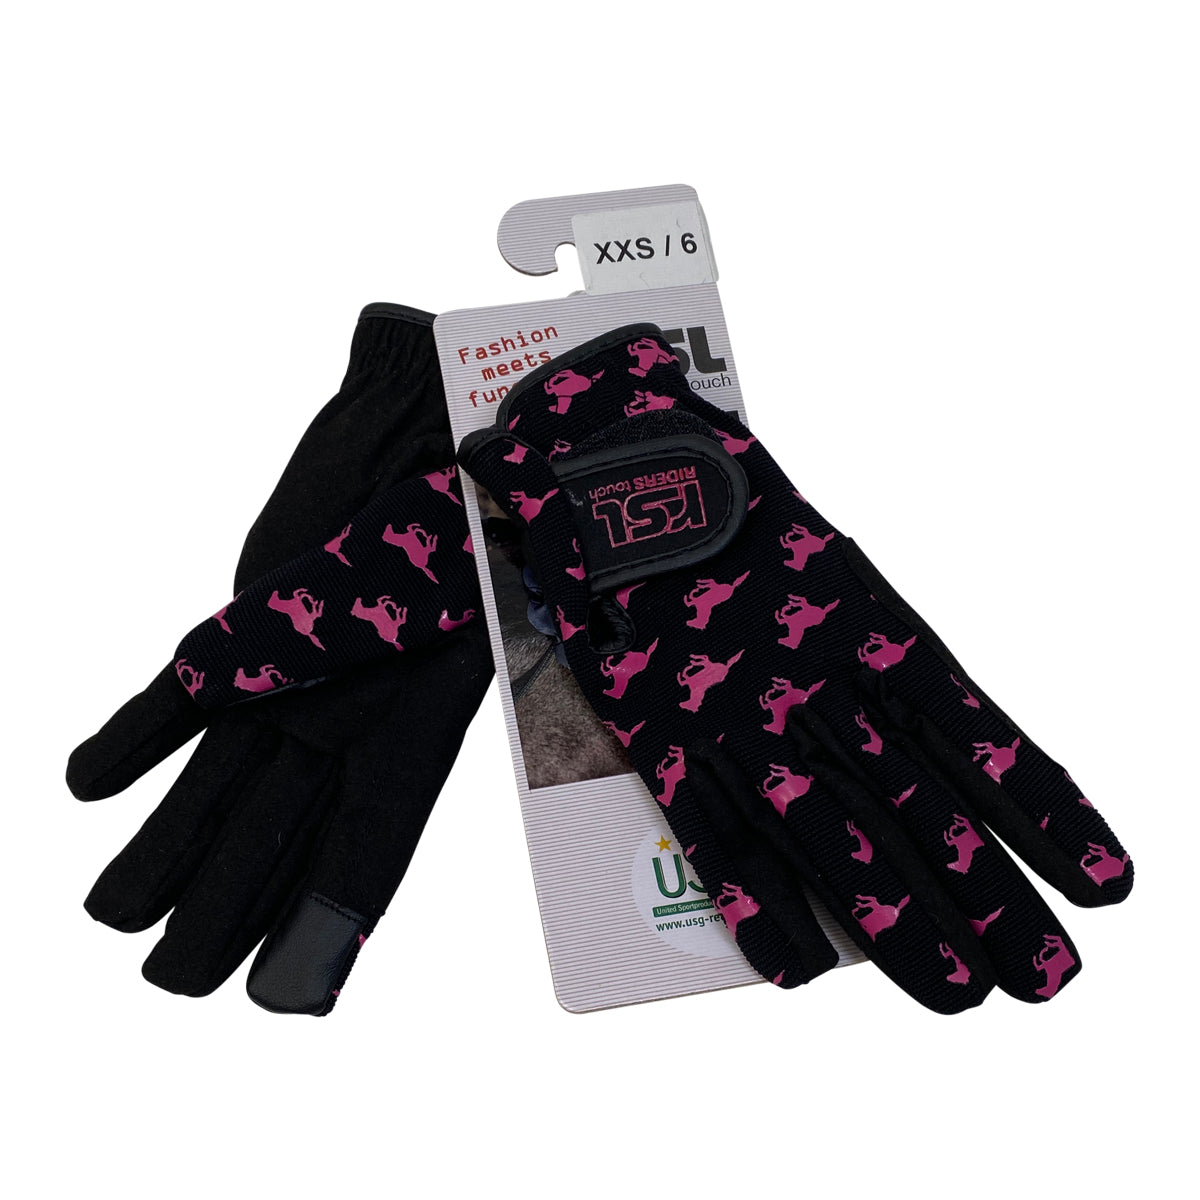 RSL Kids 'Norway' Winter Gloves in Black w/Pink Horses